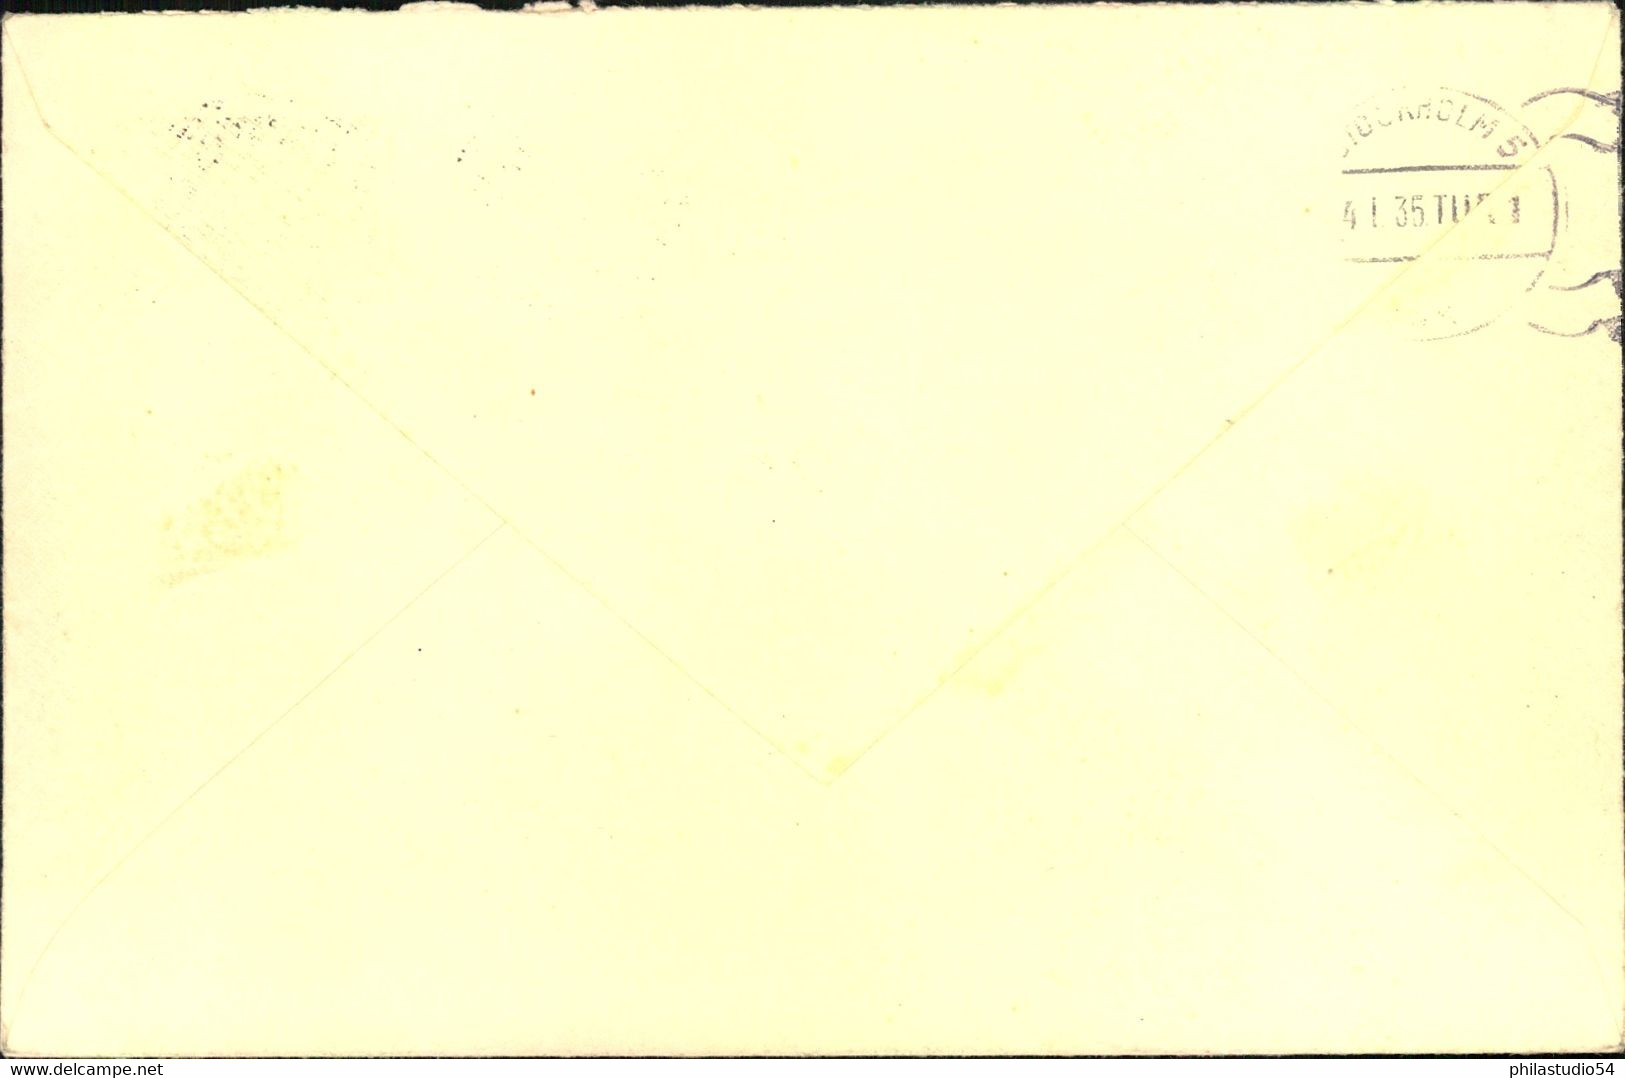 1935, Brief Mit Absender "SVENSKA BATALJONEN - SAAR" Nach Stockholm, Mit Ankunftsstempel - Cartas & Documentos